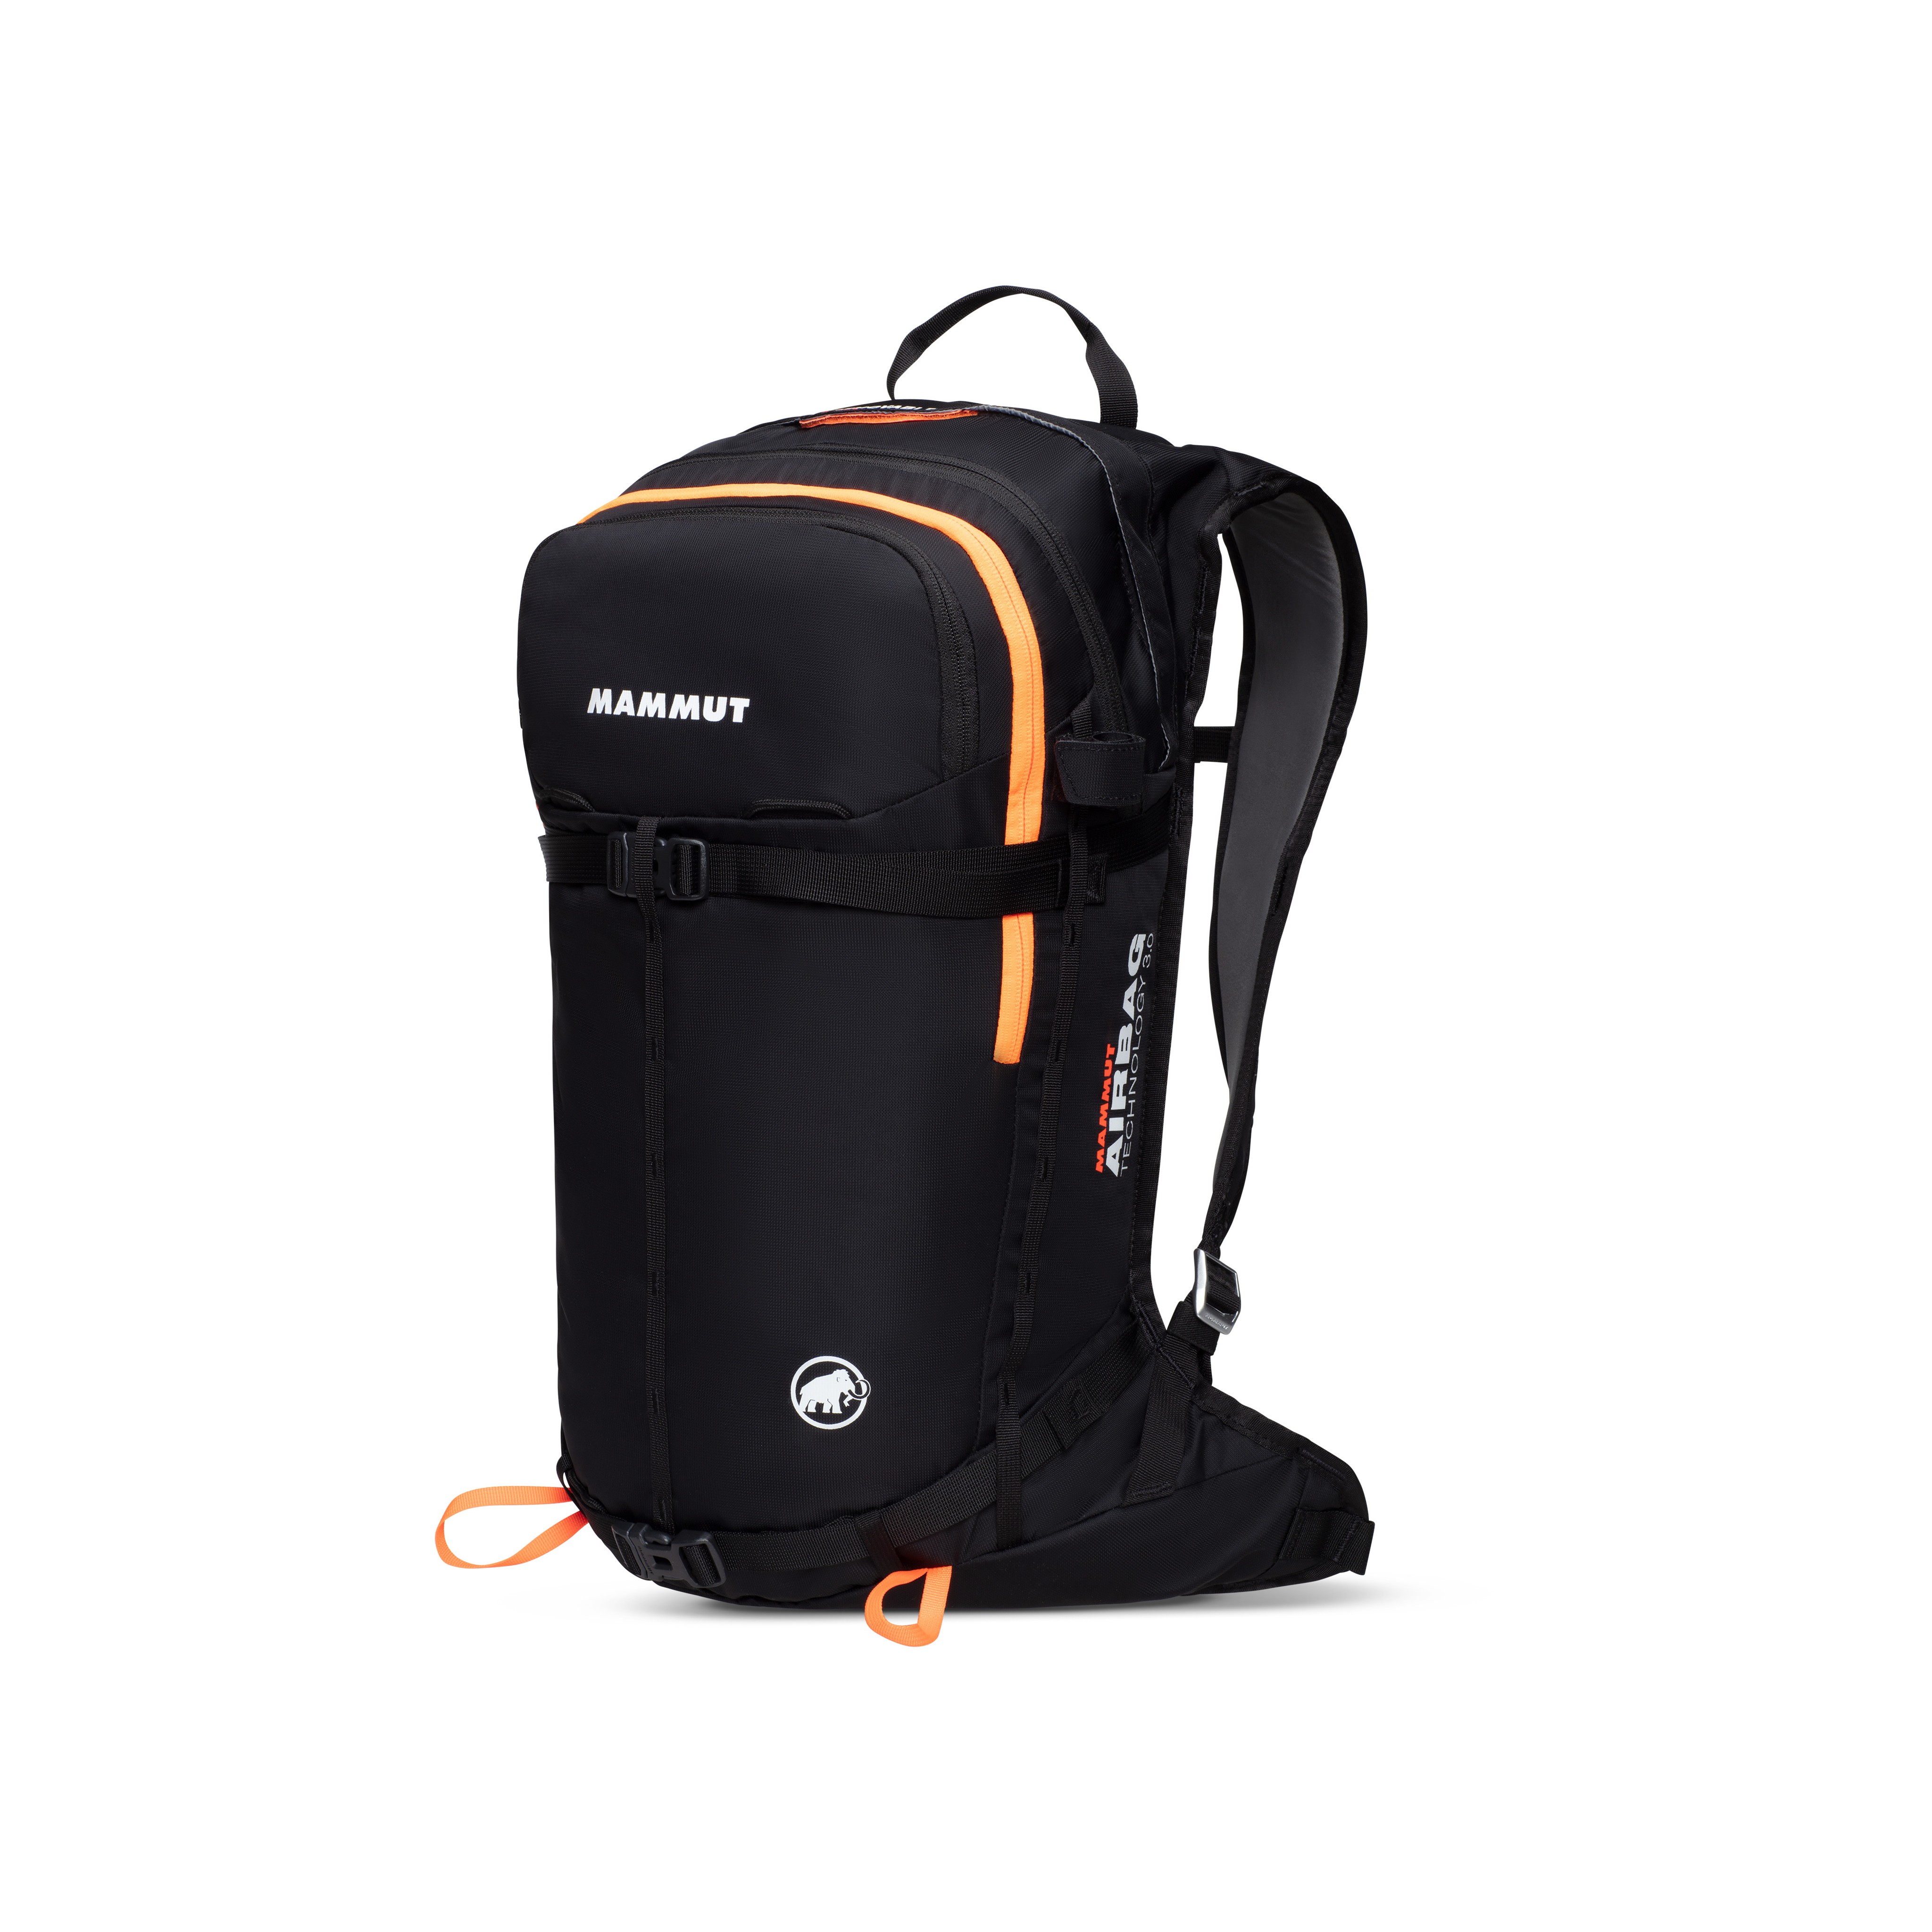 Flip Removable Airbag 3.0 ready - black-vibrant orange, 22 L product image